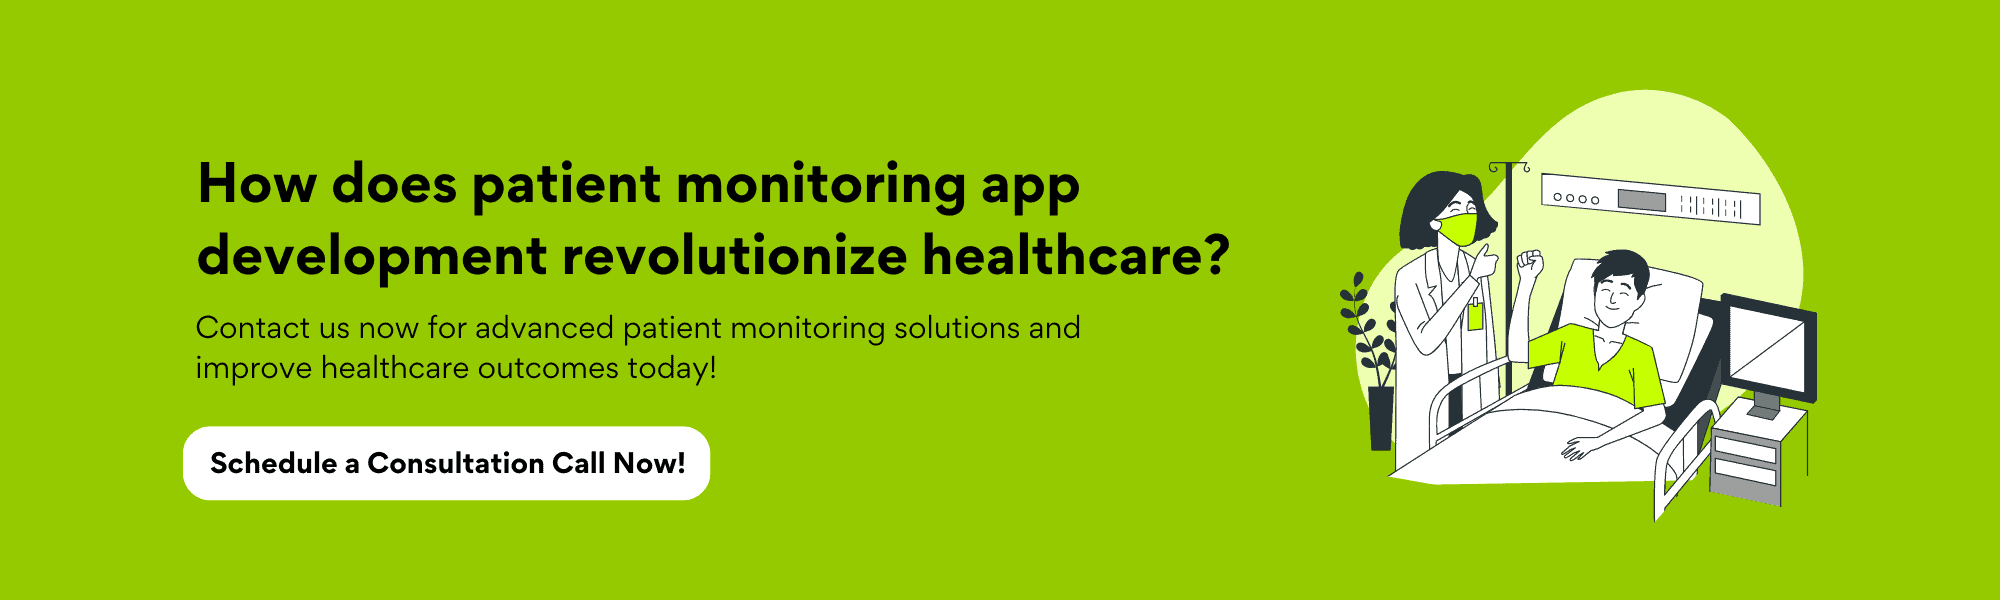 How does patient monitoring app development revolutionize healthcare